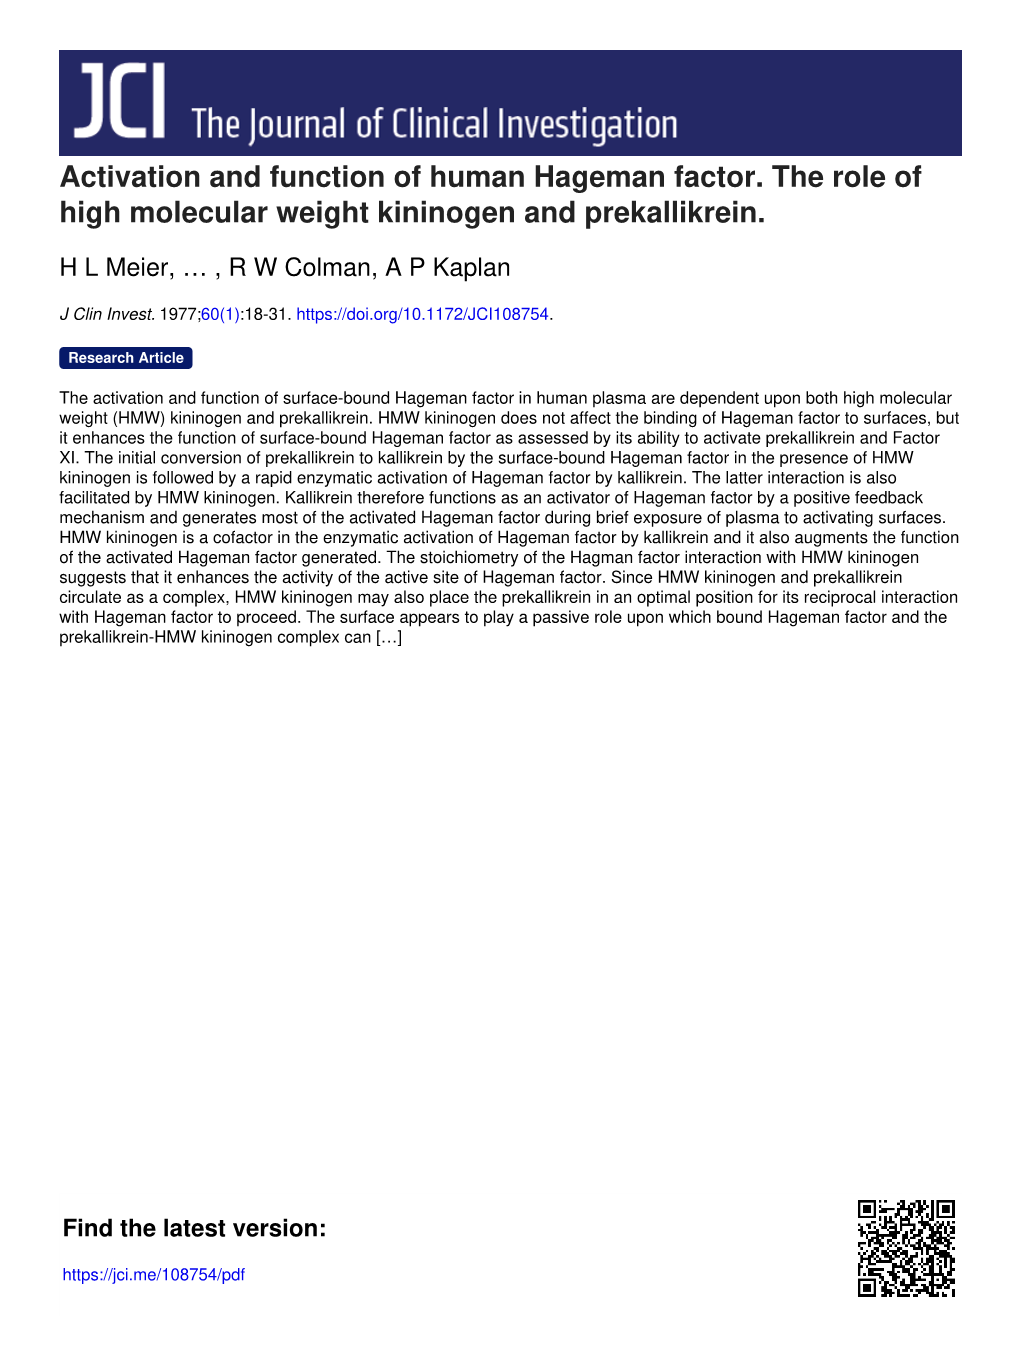 Activation and Function of Human Hageman Factor. the Role of High Molecular Weight Kininogen and Prekallikrein